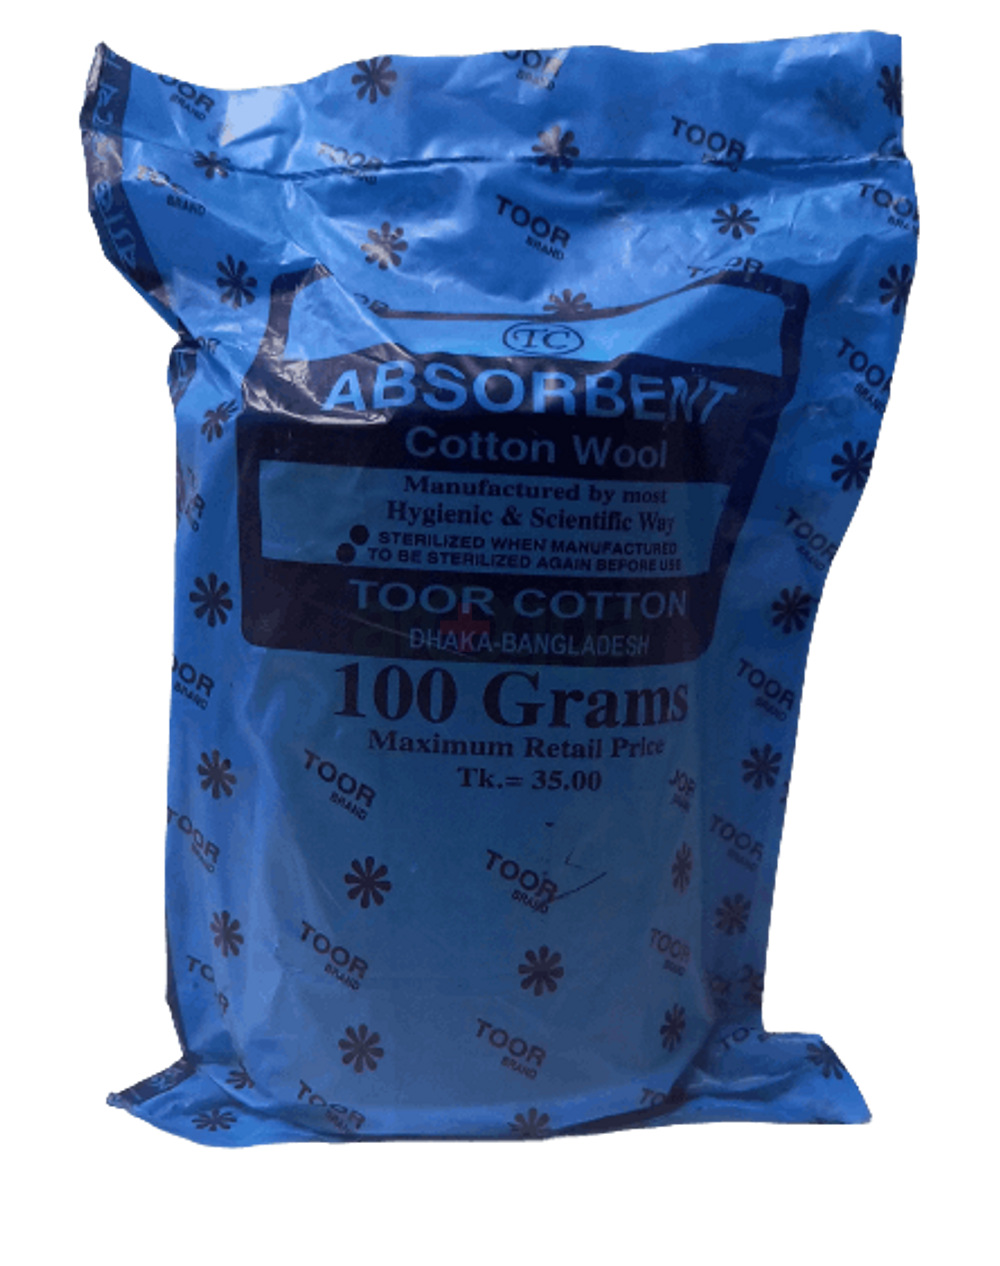 cotton-roll-100gm-wool-cotton-wool-absorbent-healthcare-arogga